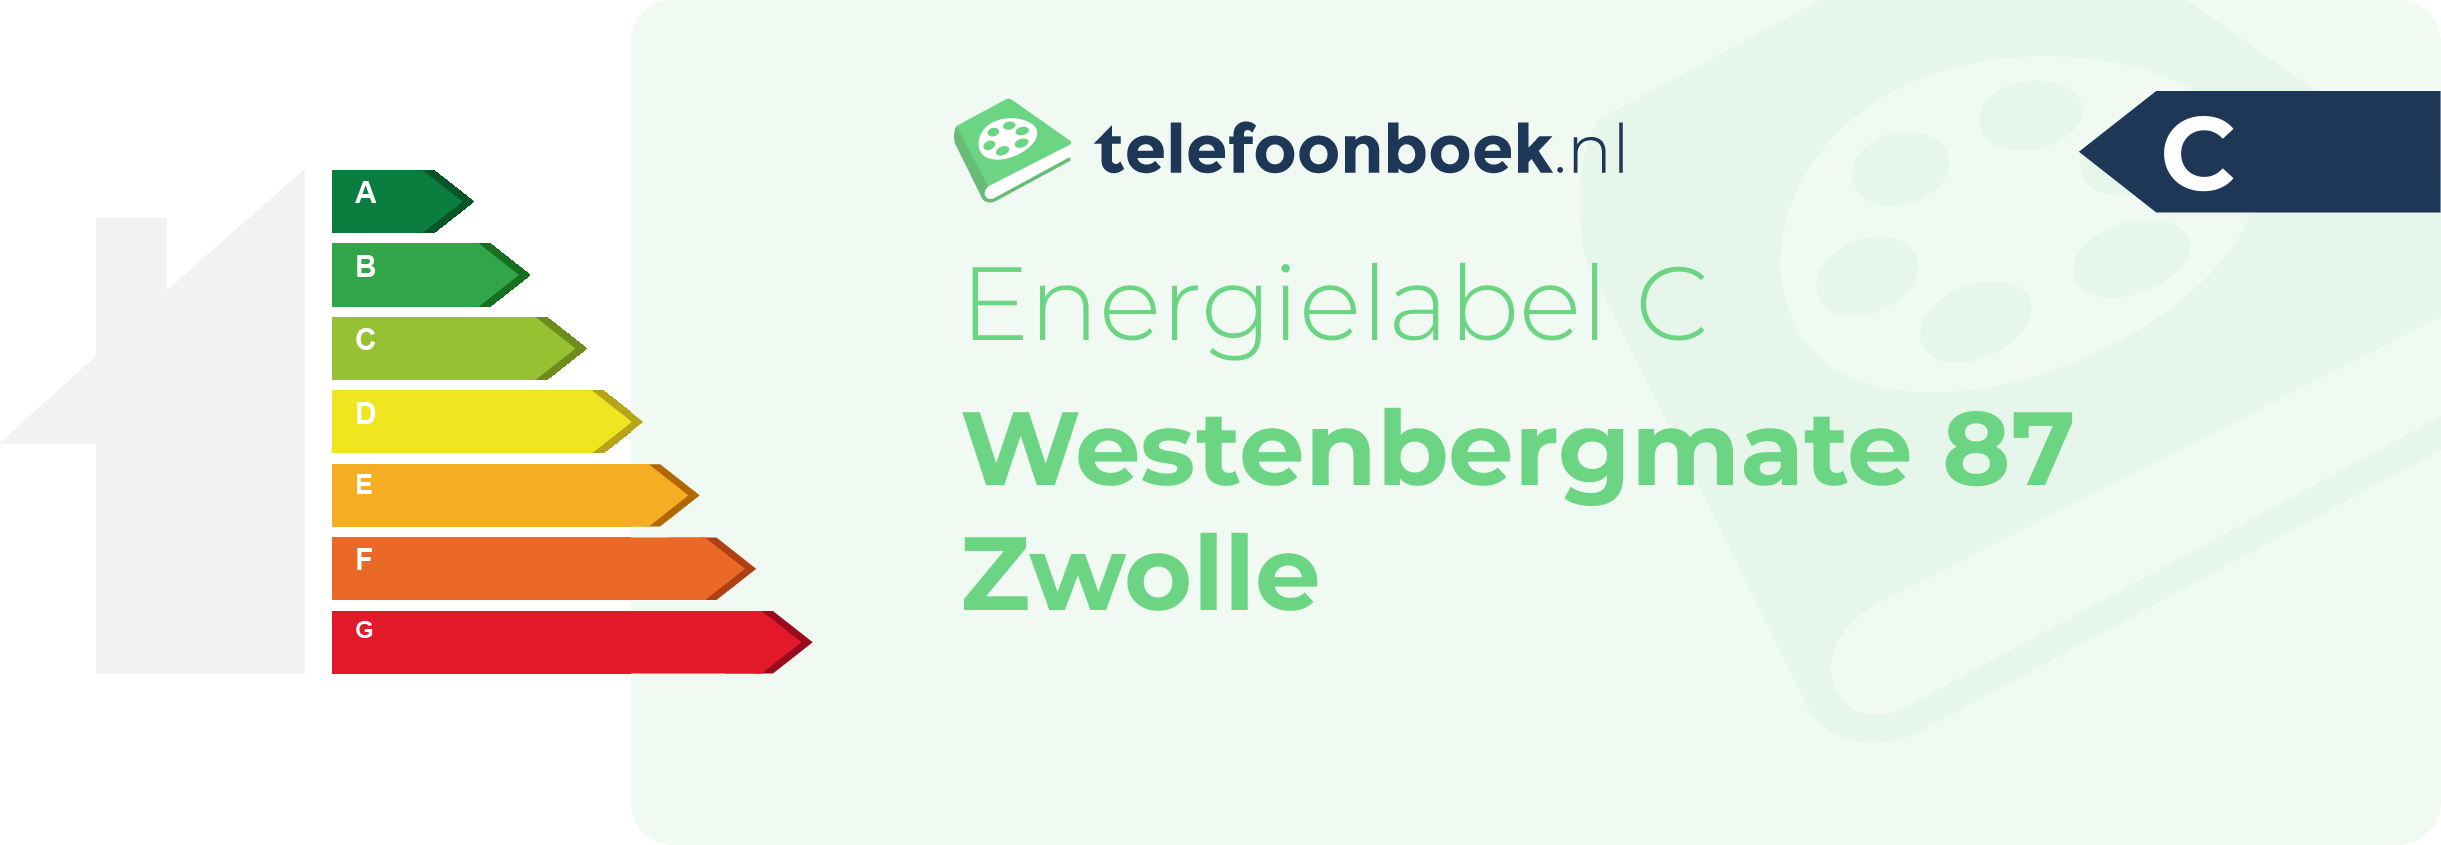 Energielabel Westenbergmate 87 Zwolle